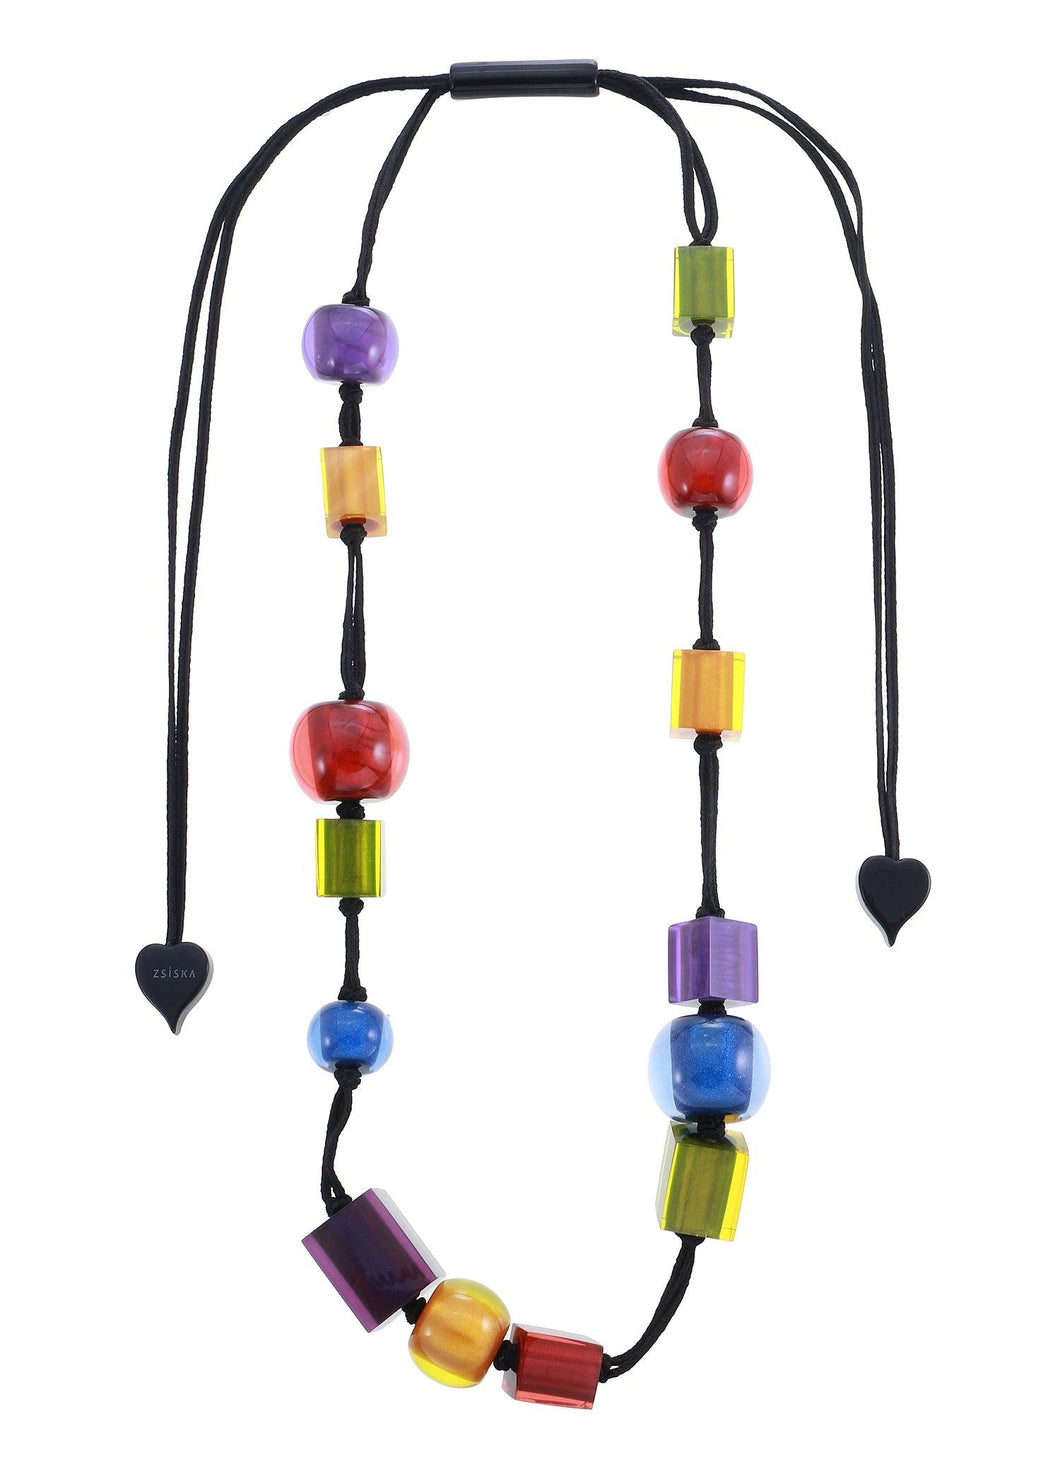 Colourful Beads Necklace - Winter Spectrum - 14 Beads - ZSISKA